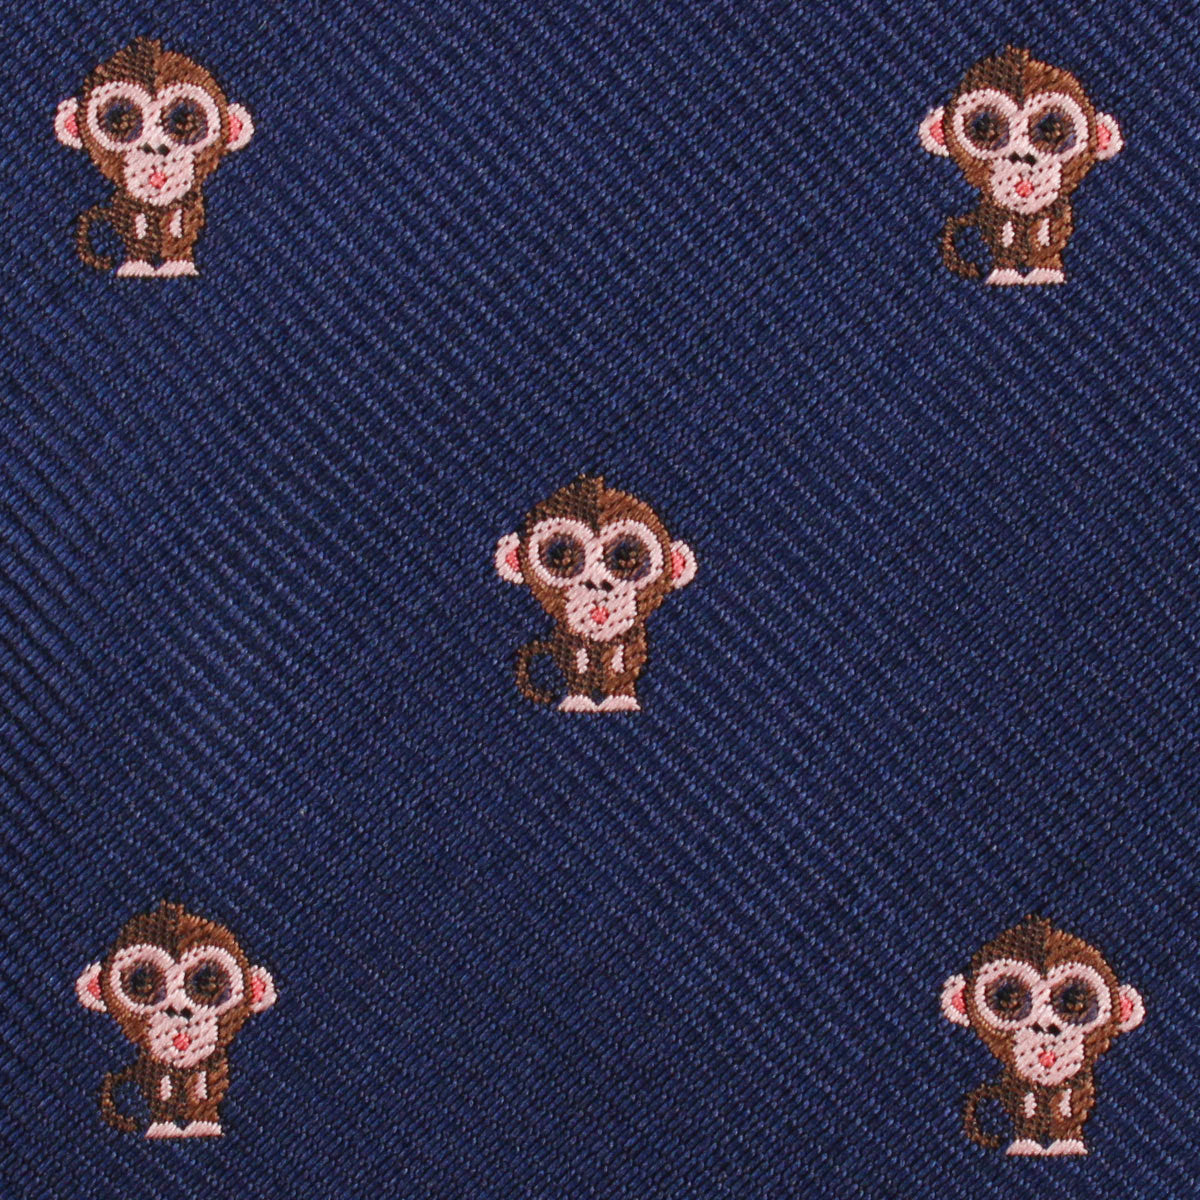 Monkey Fabric Self Diamond Bowtie